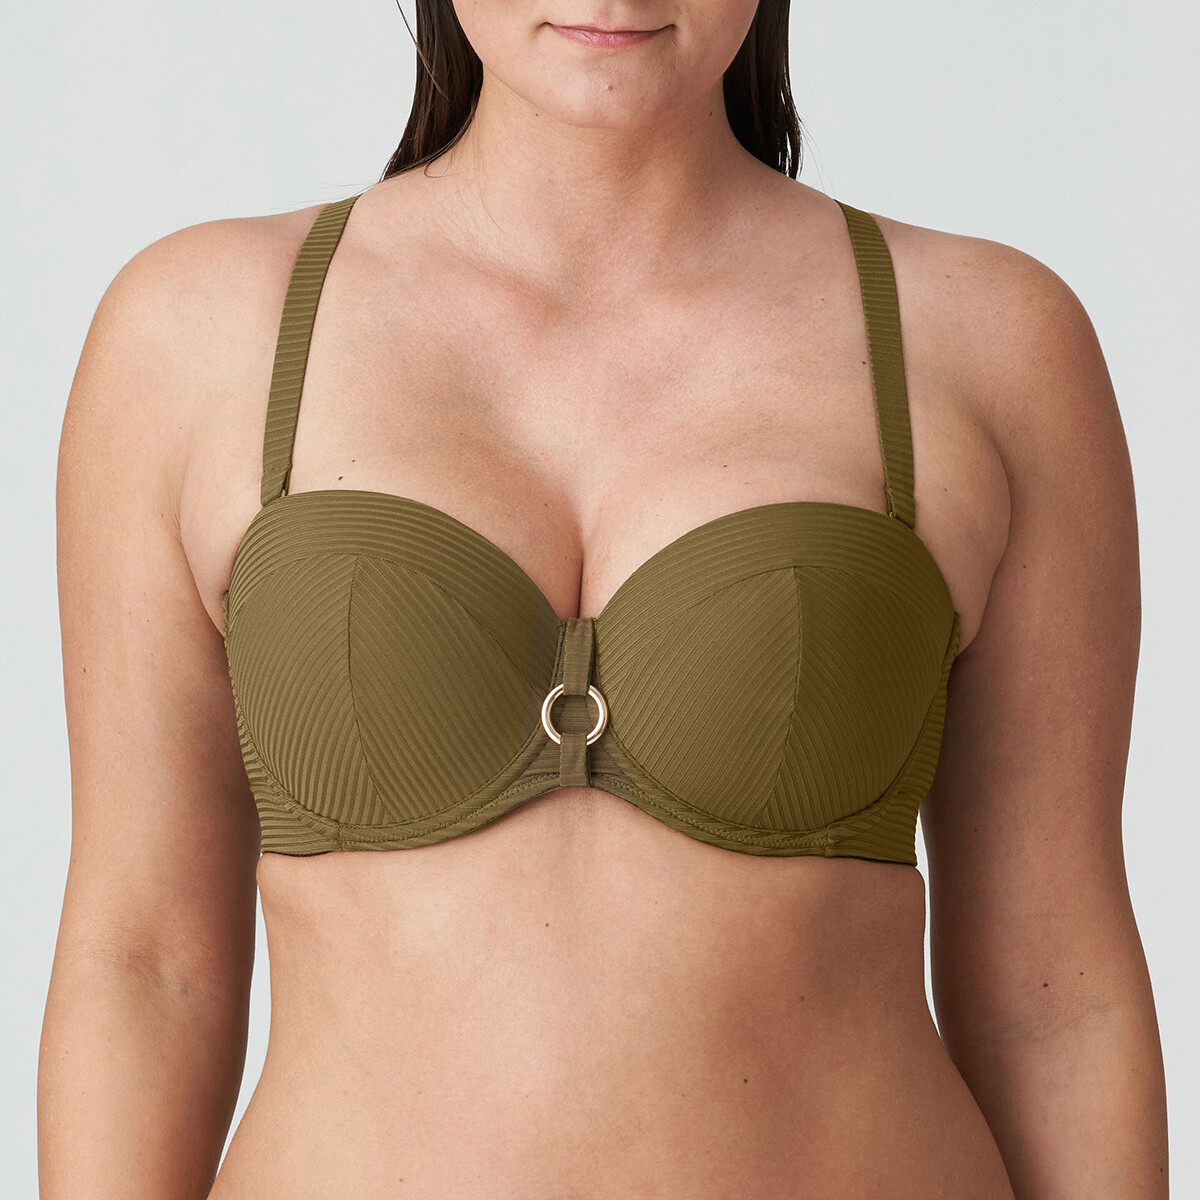 PrimaDonna Sahara Bikini Topp Med Bøjle, Farve: Grøn, Størrelse: 80F, Dame